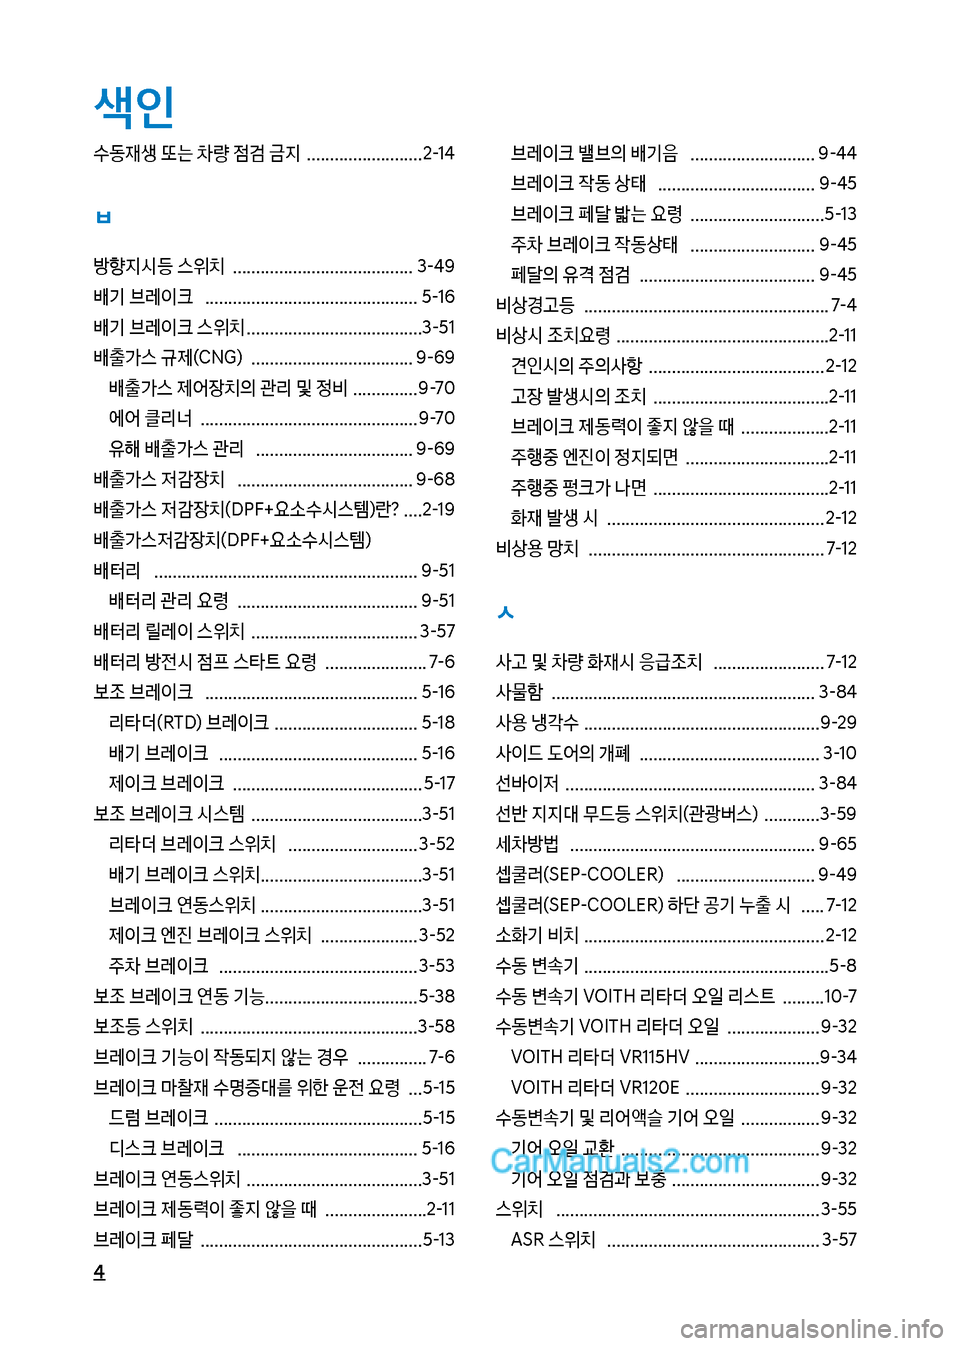 Hyundai New County 2017  뉴카운티 - 사용 설명서 (in Korean) 색인
4
수동
d생보또는보0량보
|h보